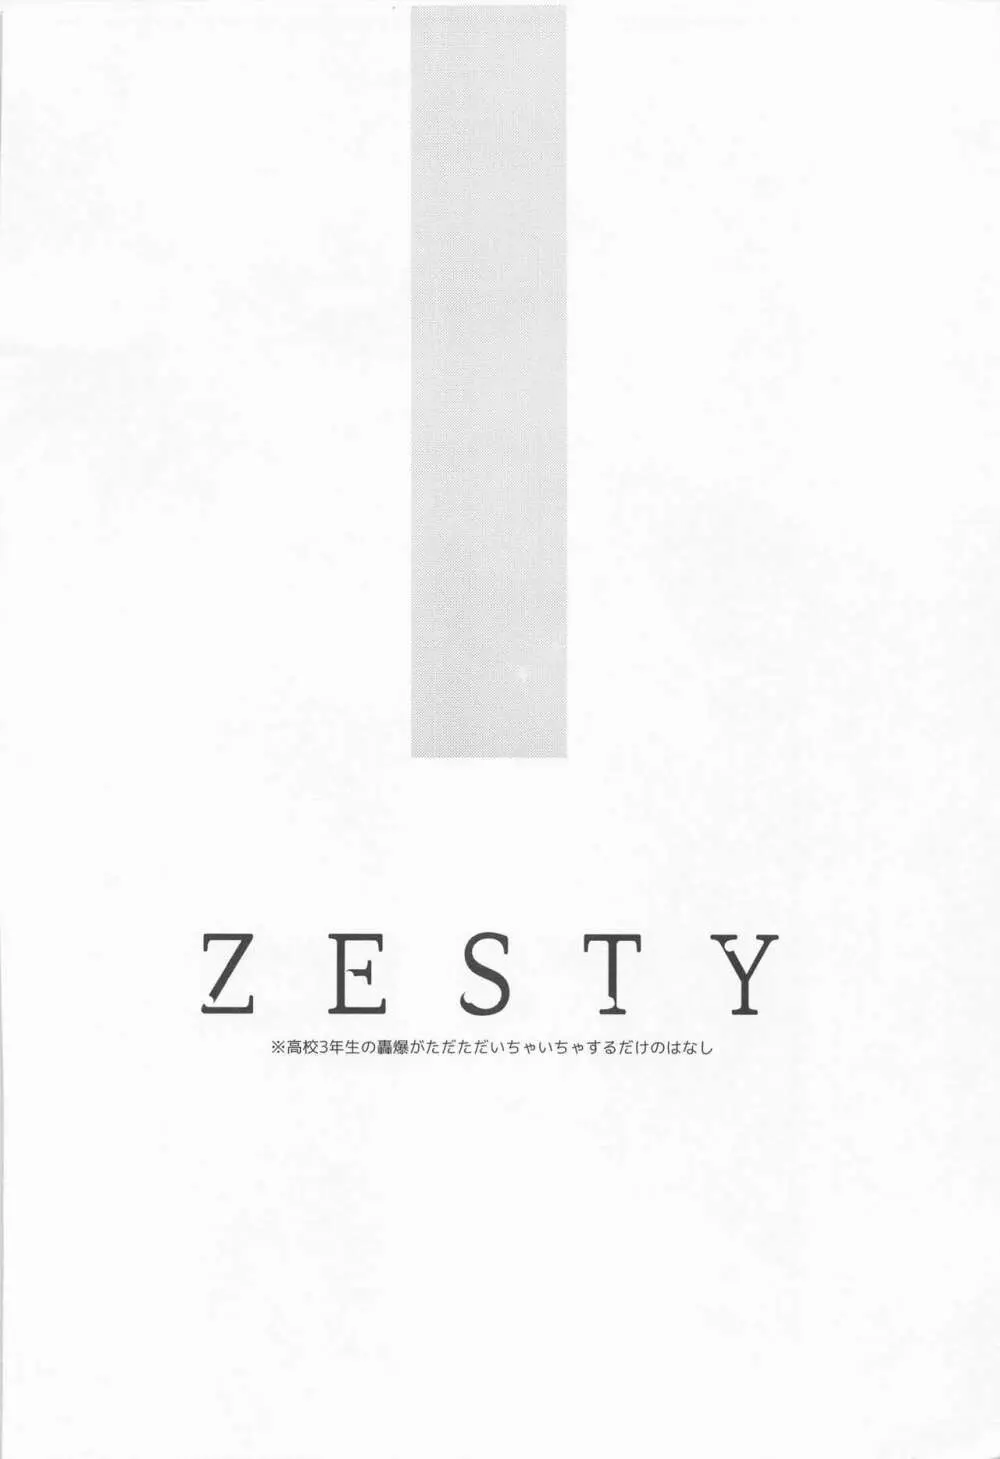 ZESTY - page3